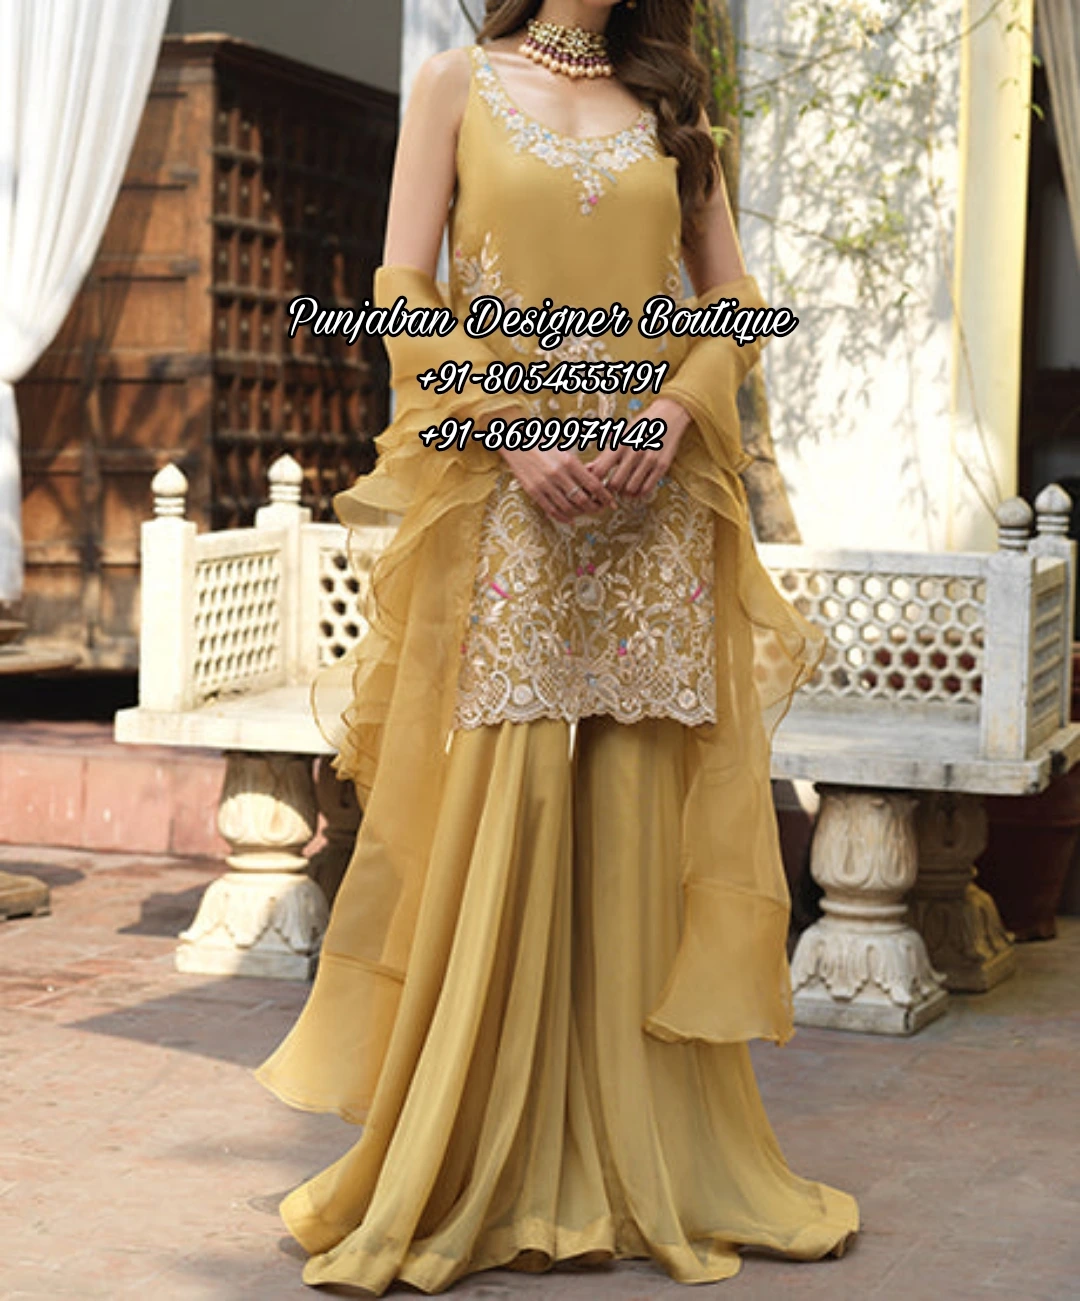 Latest Punjabi Suits Fashion | Punjaban Designer Boutique